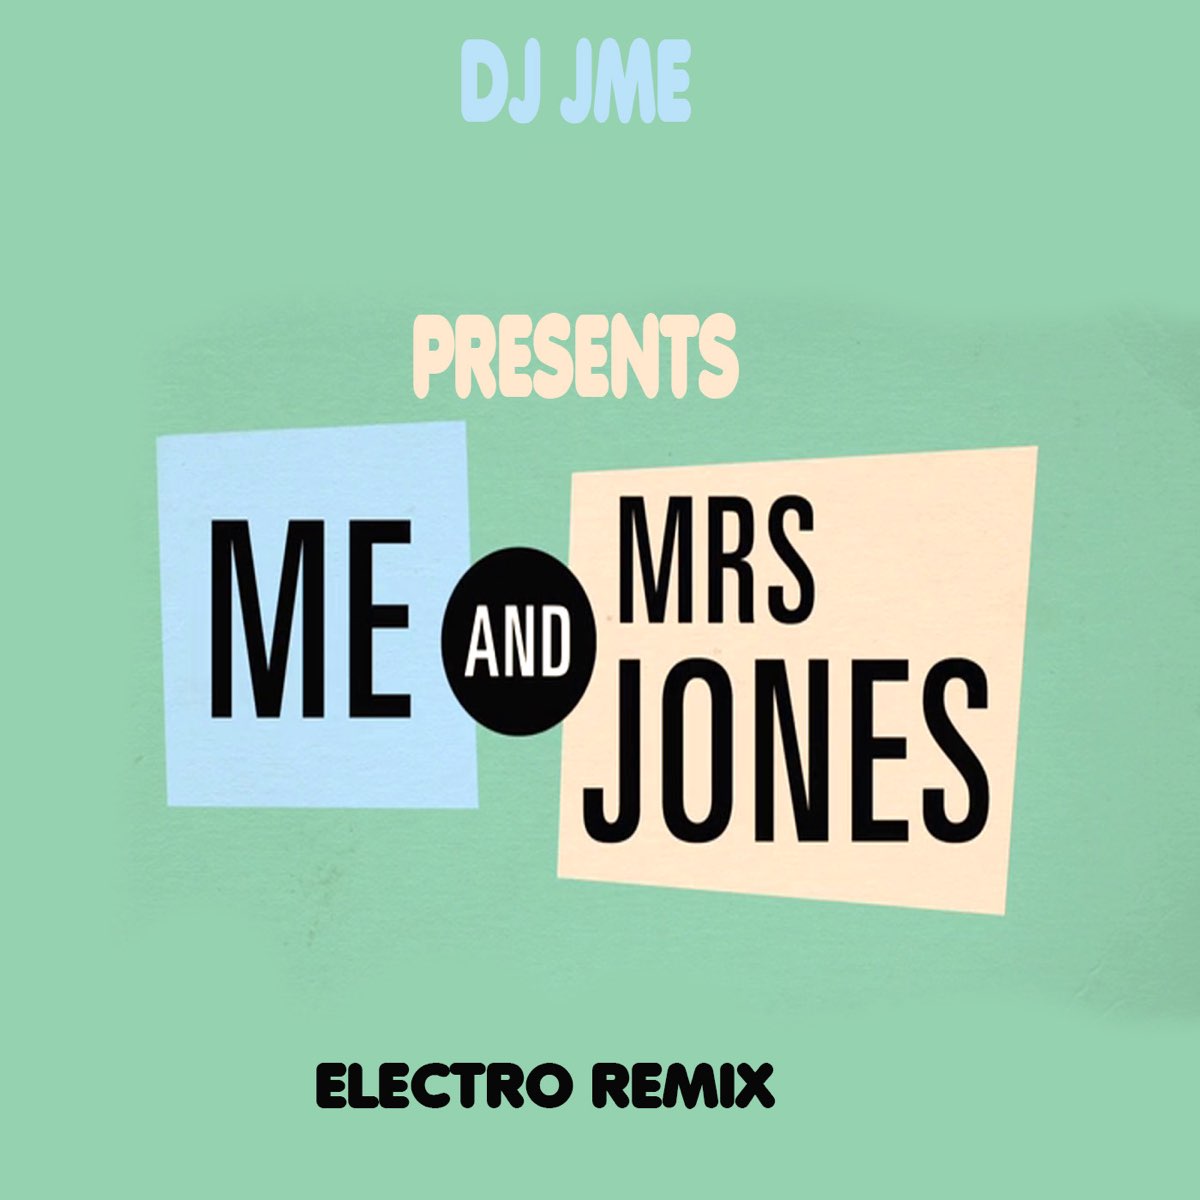 Me & Mrs Jones (Electro Remix) - Single by Dj JME on Apple Music